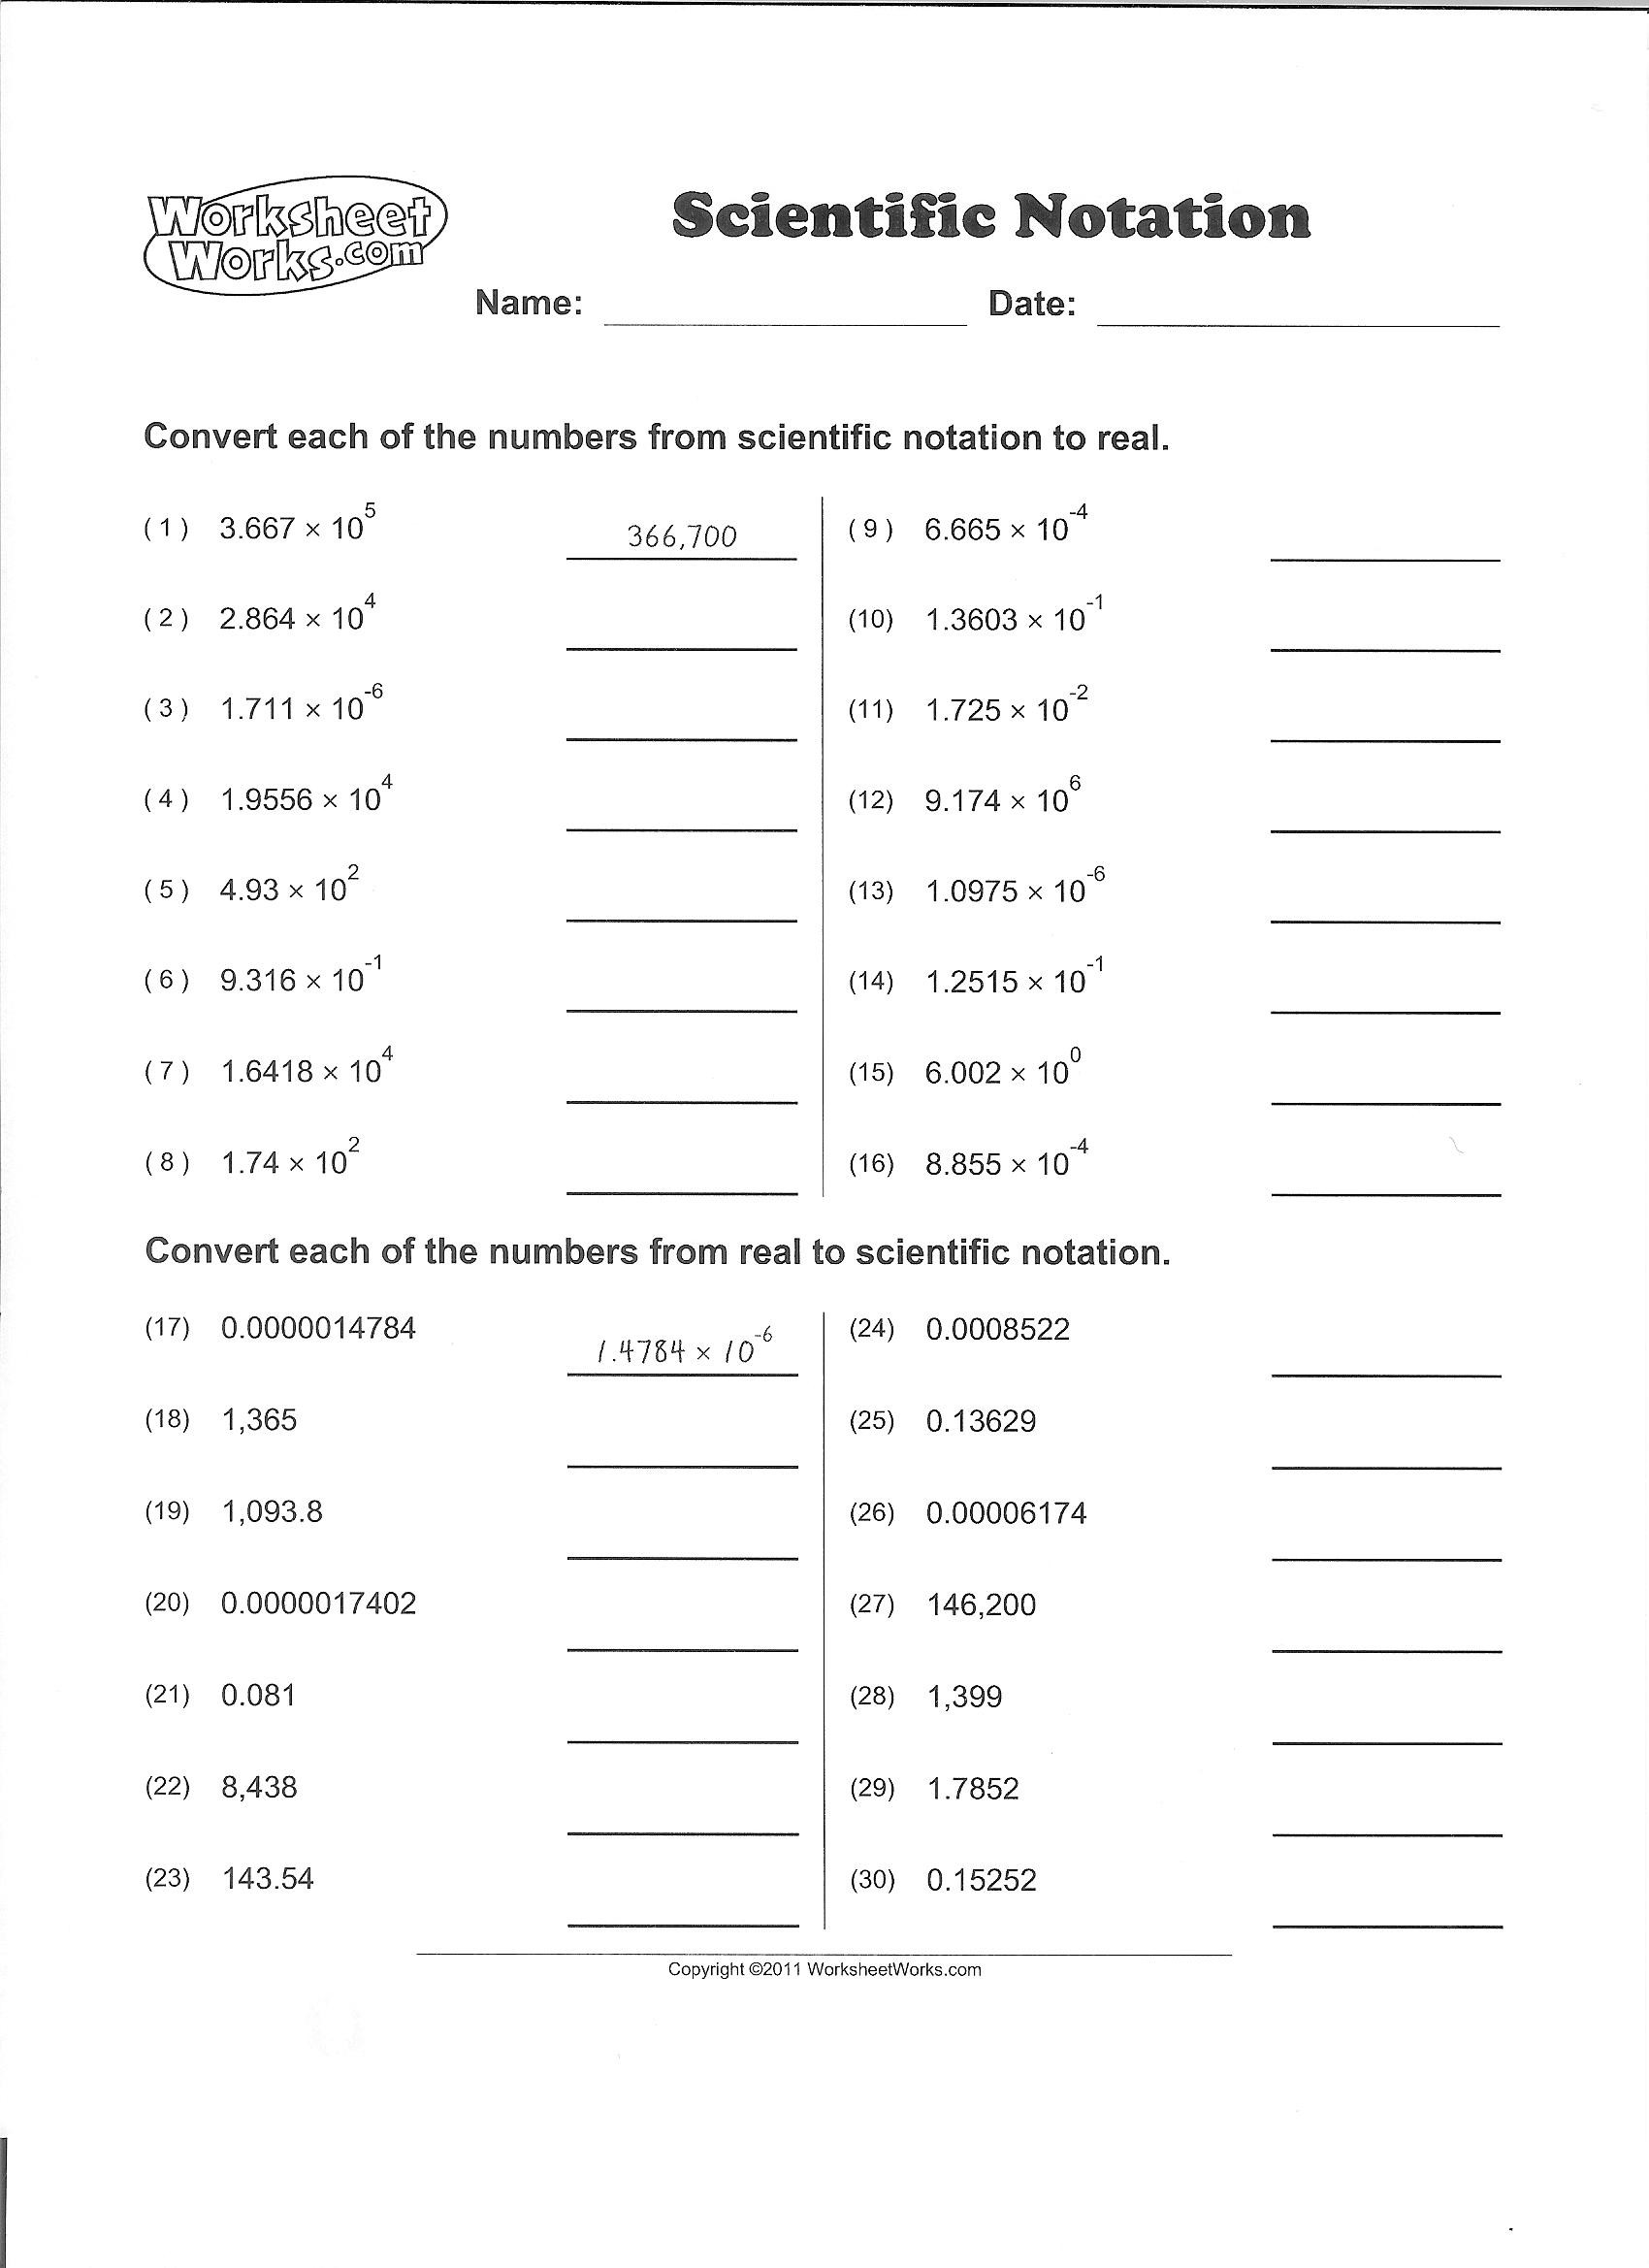 Scientific Notation Worksheet Chemistry 28 [ Operations with Scientific Notation Worksheet